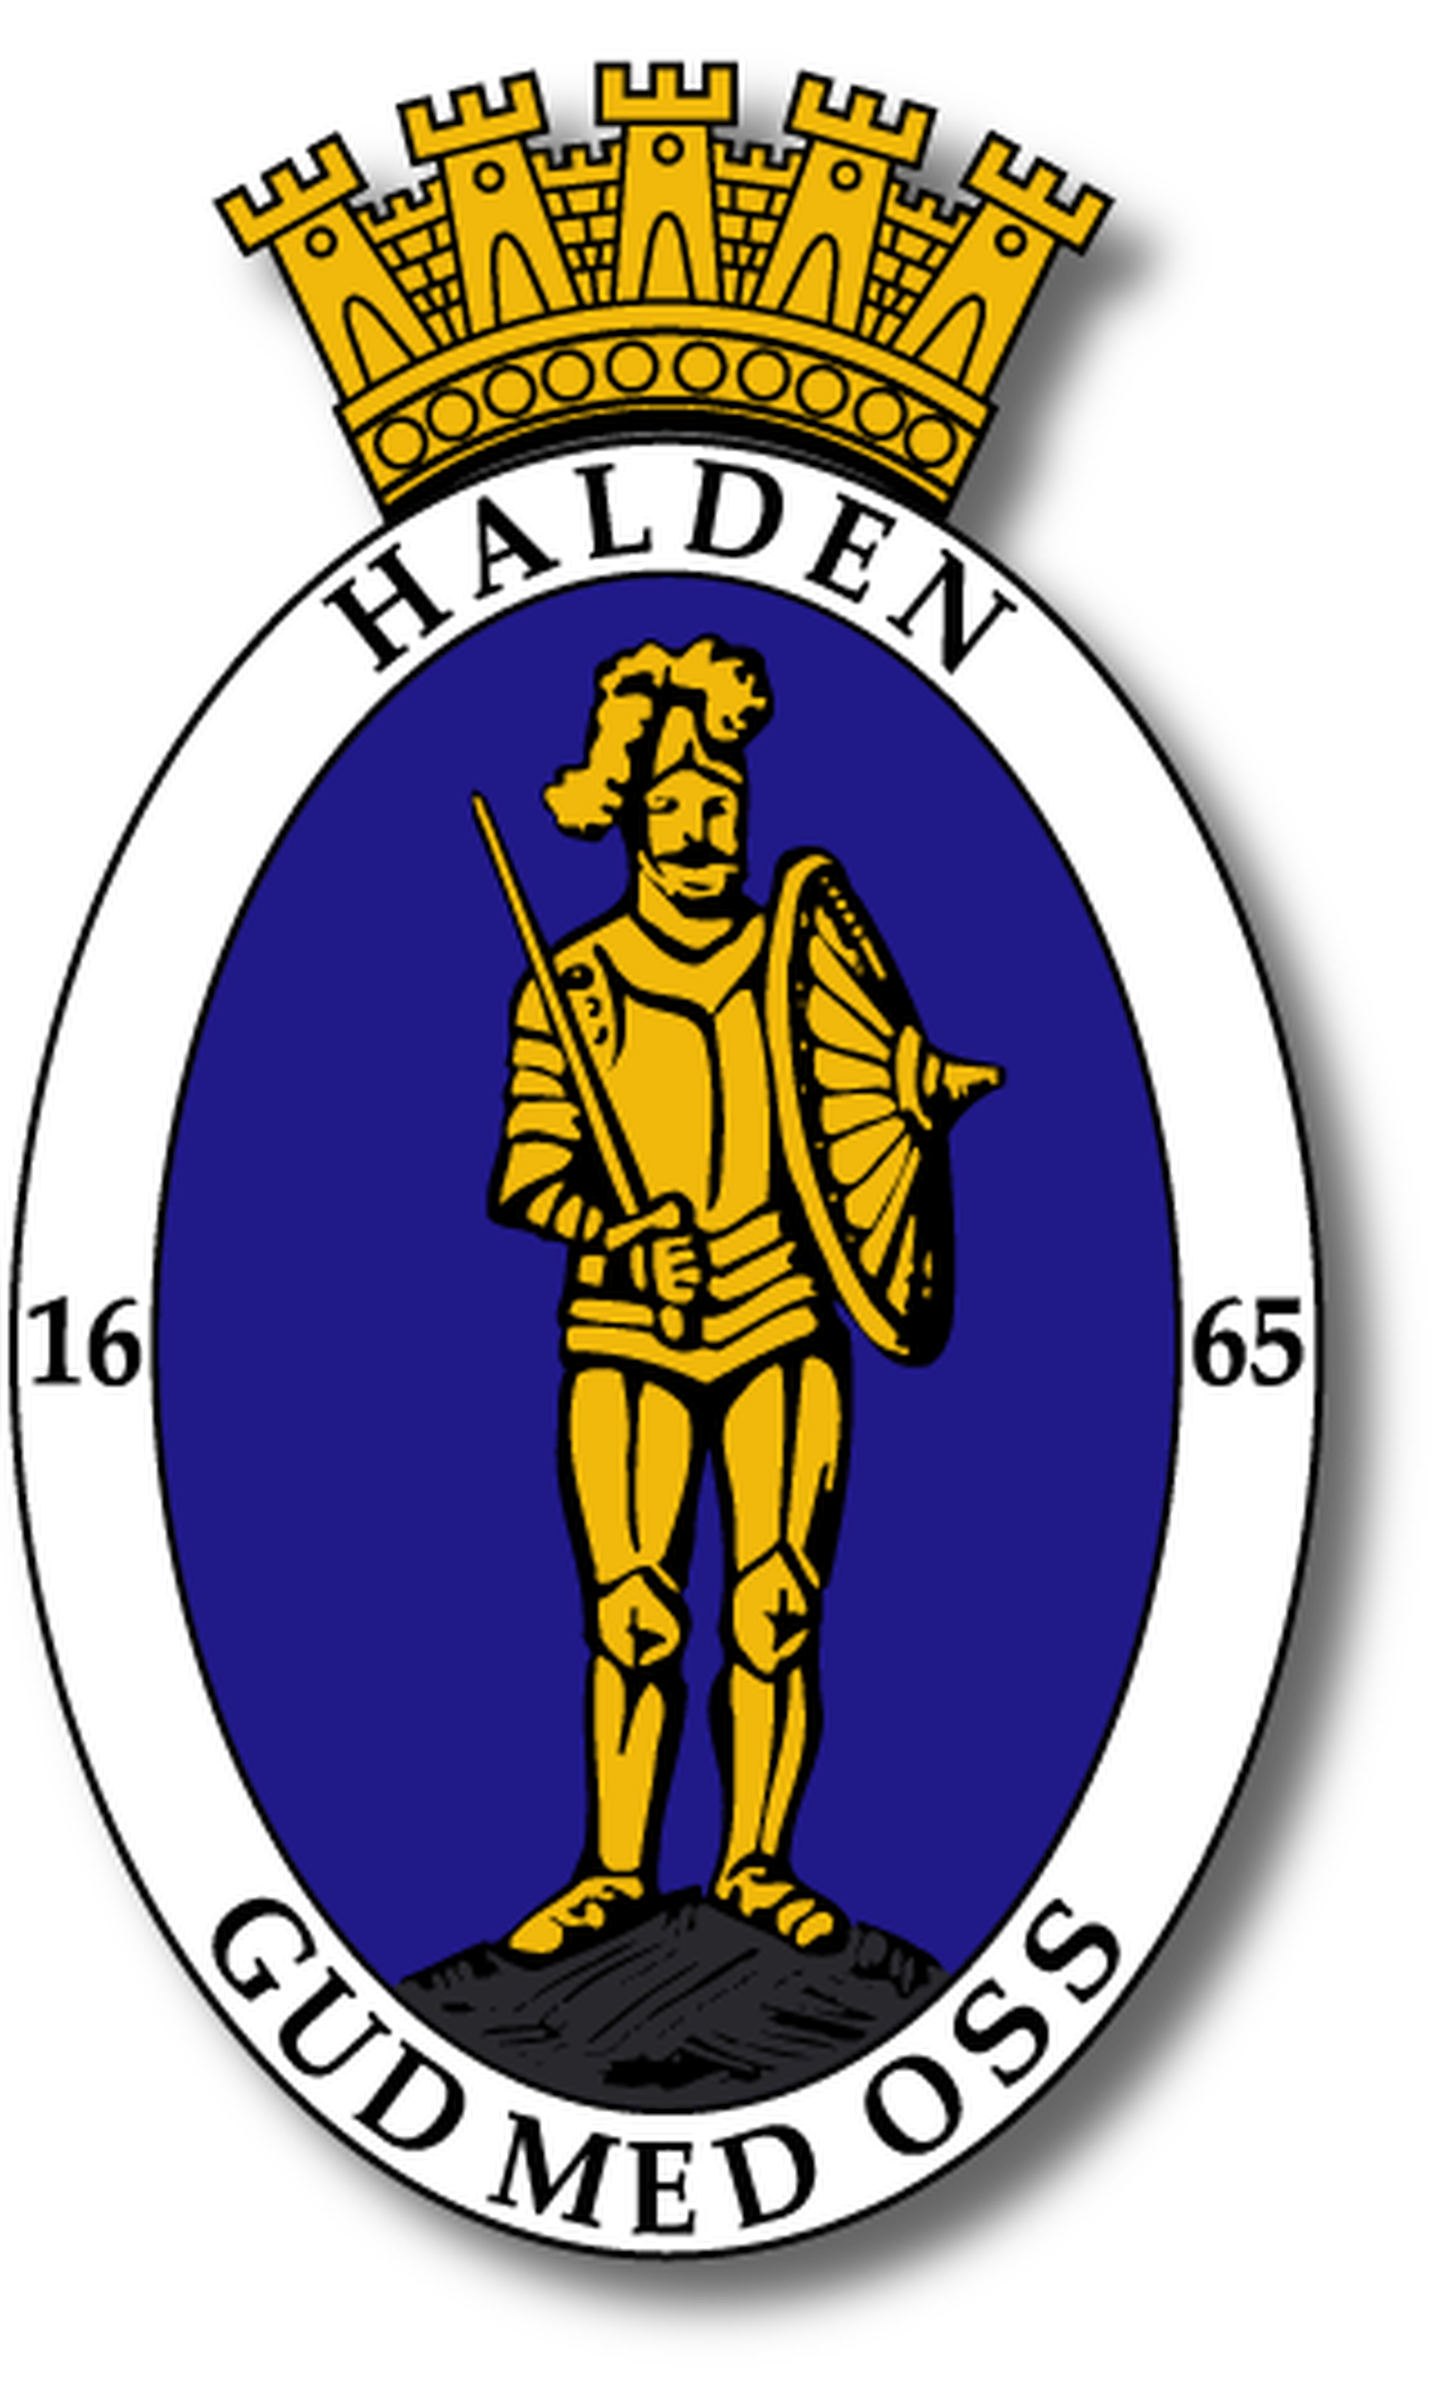 Halden kommune byvåpen